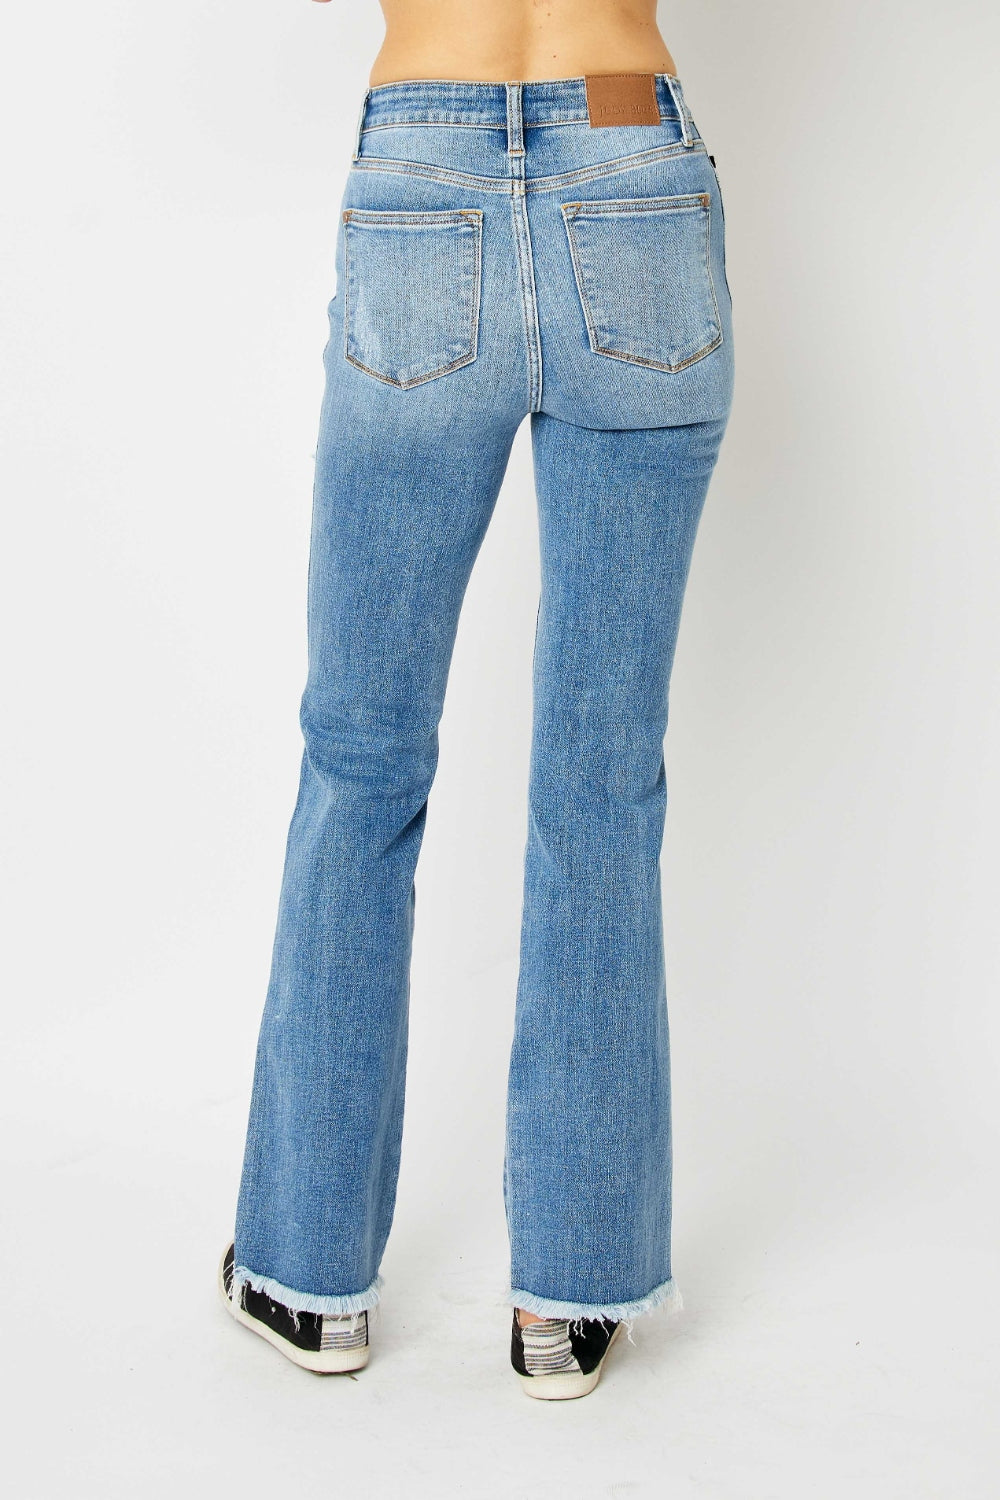 Back View, Judy Blue, High Waist Frayed Hem Bootcut Jeans Style 82542